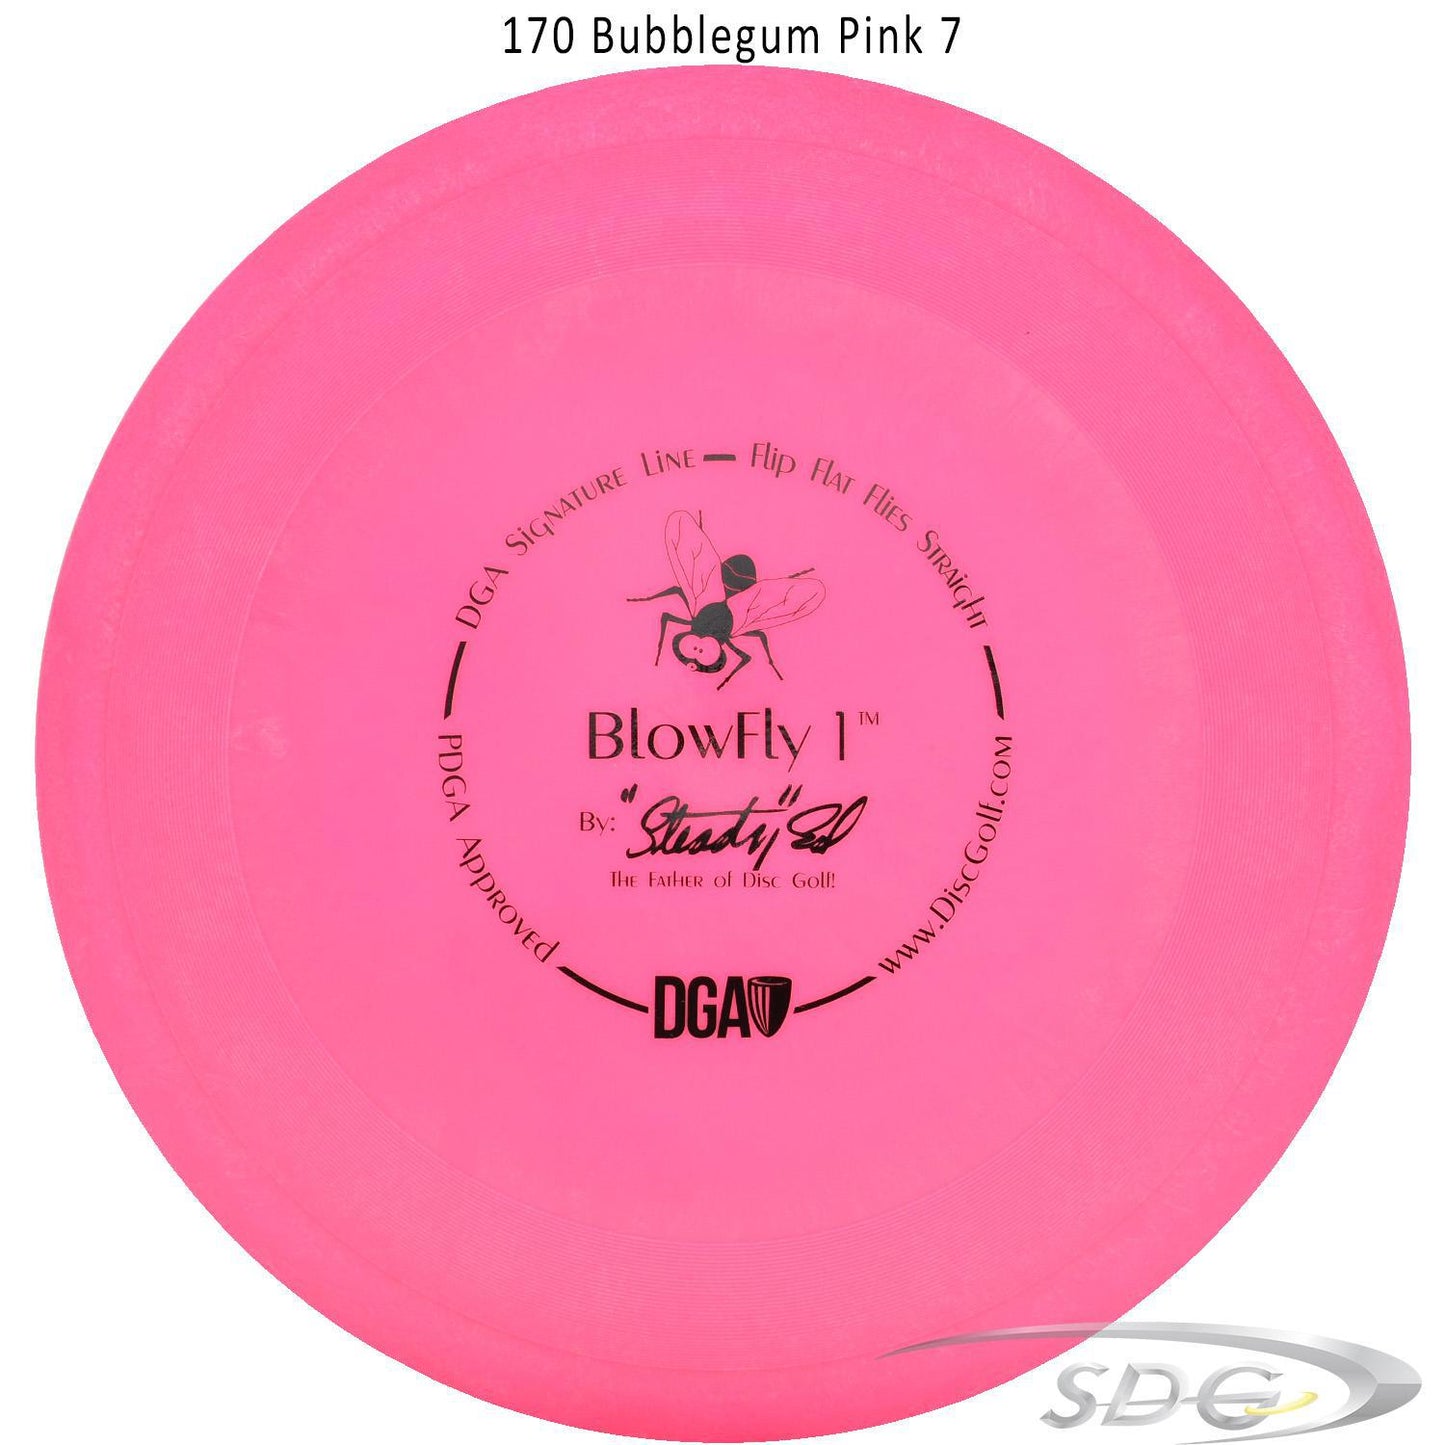 dga-signature-line-blowfly-1-disc-golf-putter 170 Bubblegum Pink 7 